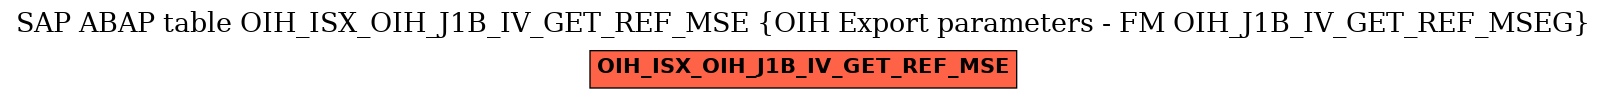 E-R Diagram for table OIH_ISX_OIH_J1B_IV_GET_REF_MSE (OIH Export parameters - FM OIH_J1B_IV_GET_REF_MSEG)